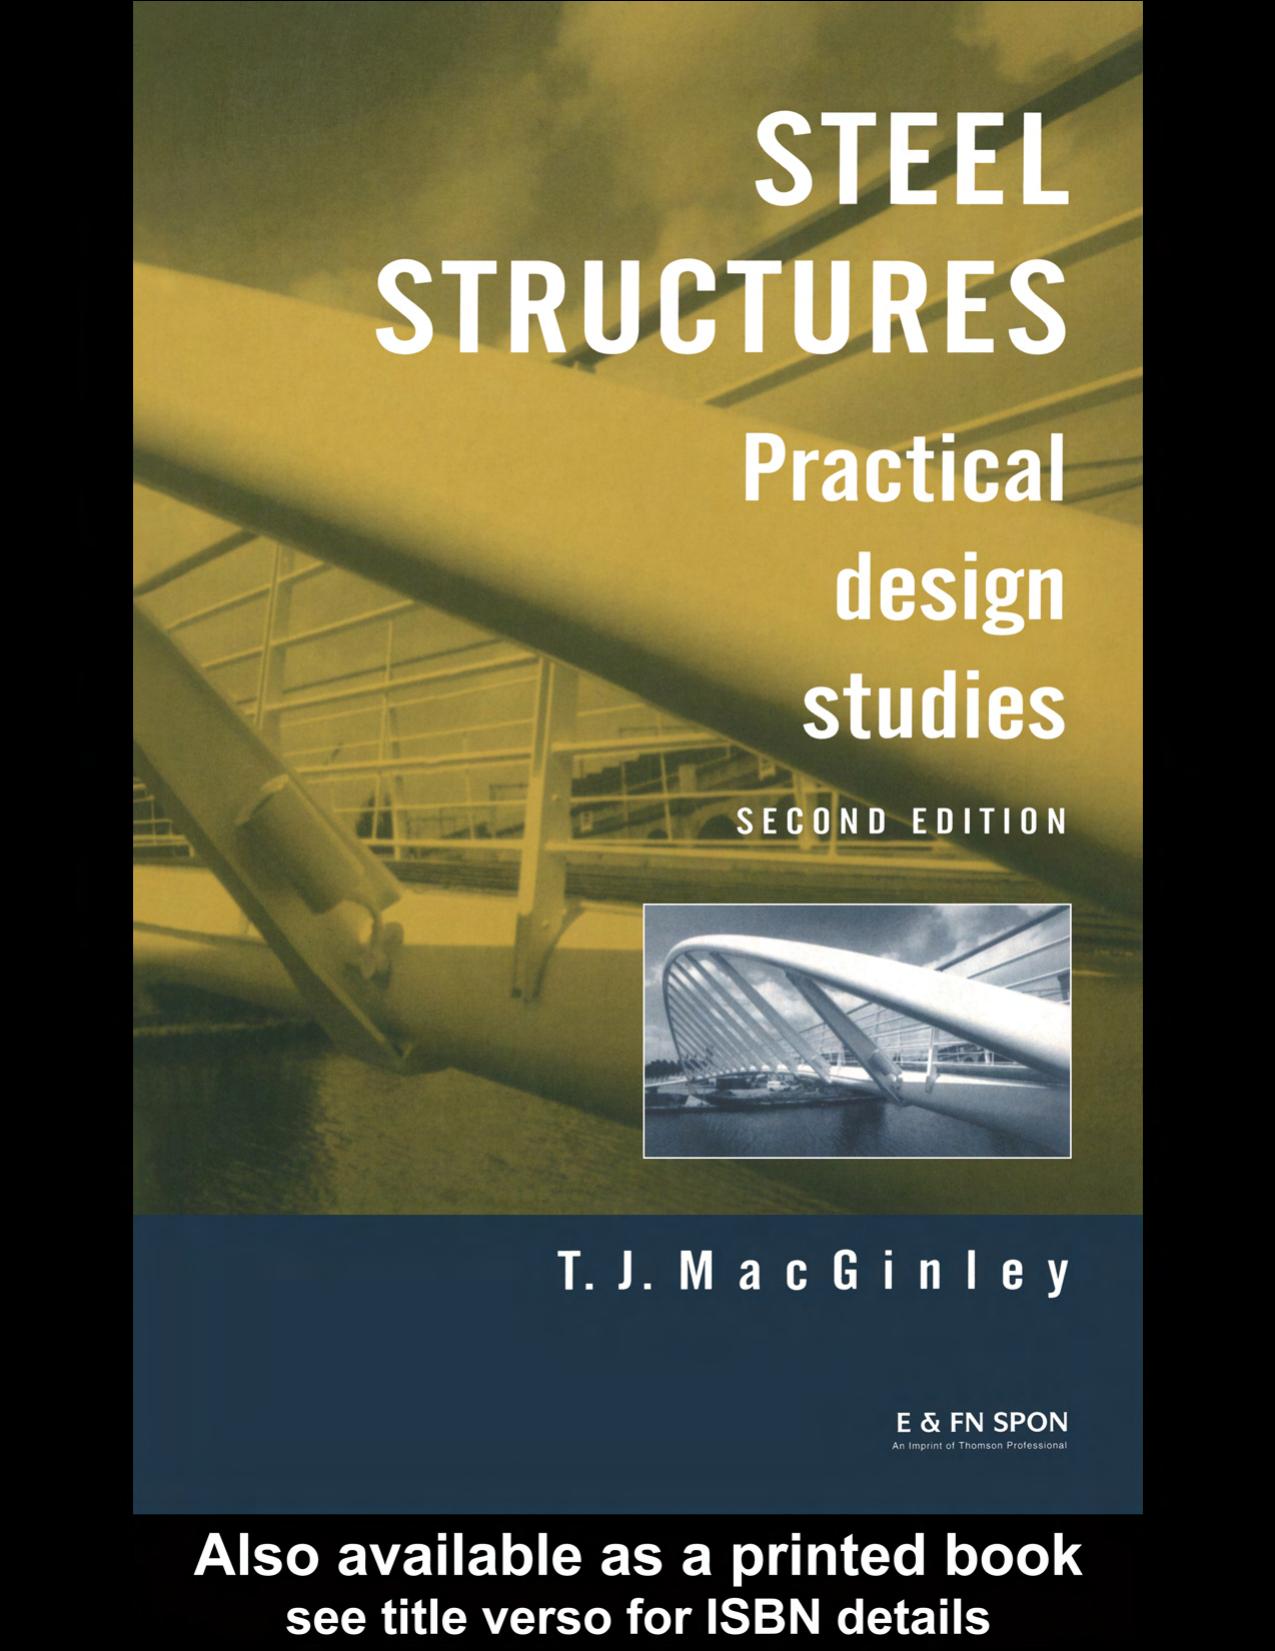 Steel Structures: Practical Design Studies, Second Edition